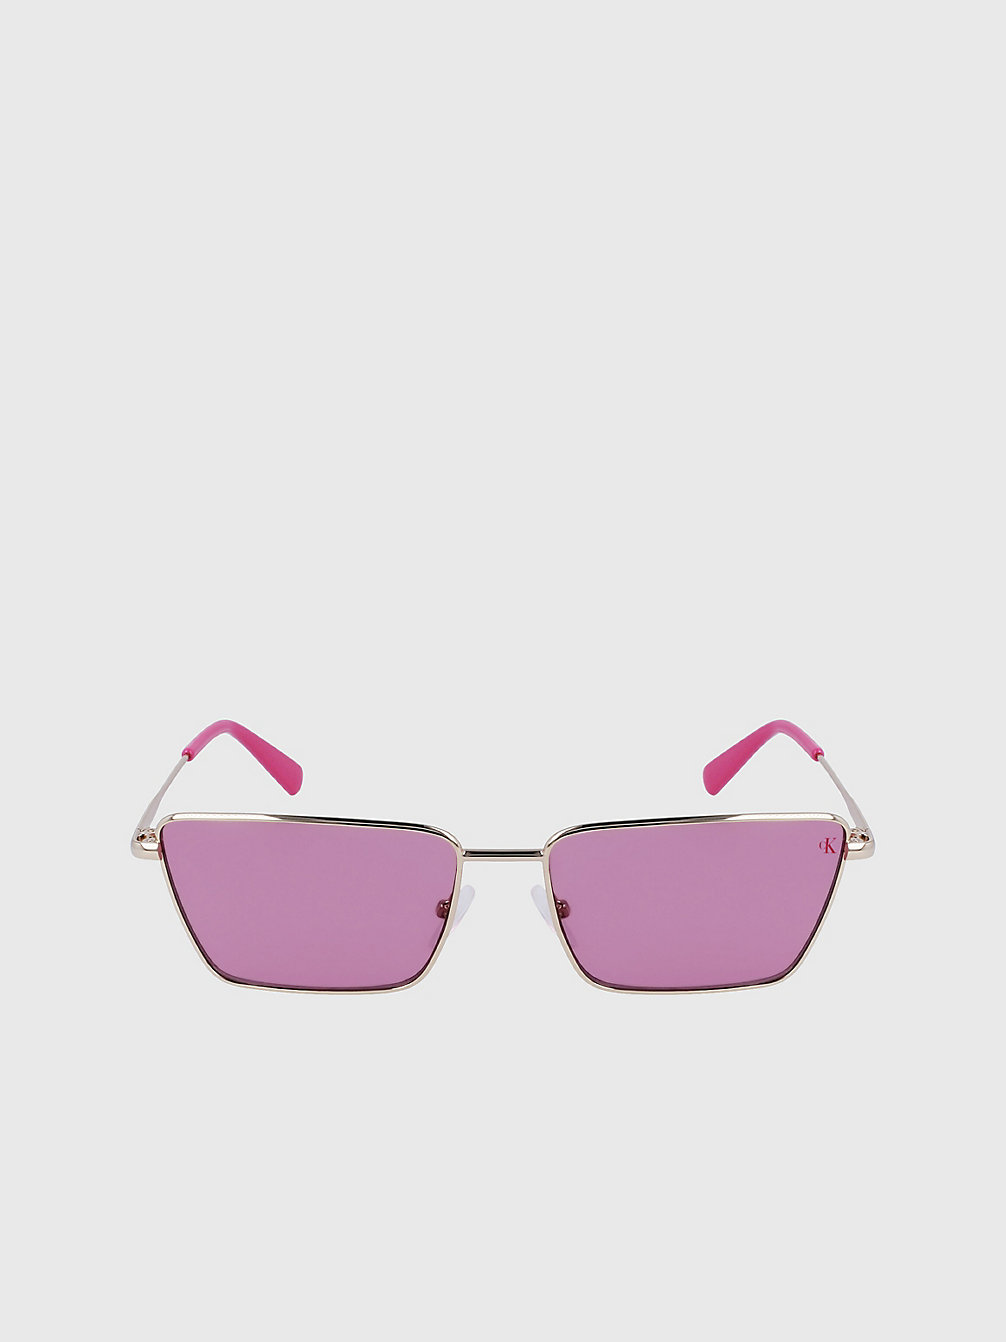 GOLD/PINK > Прямоугольные солнцезащитные очки Ckj22217s > undefined unisex - Calvin Klein